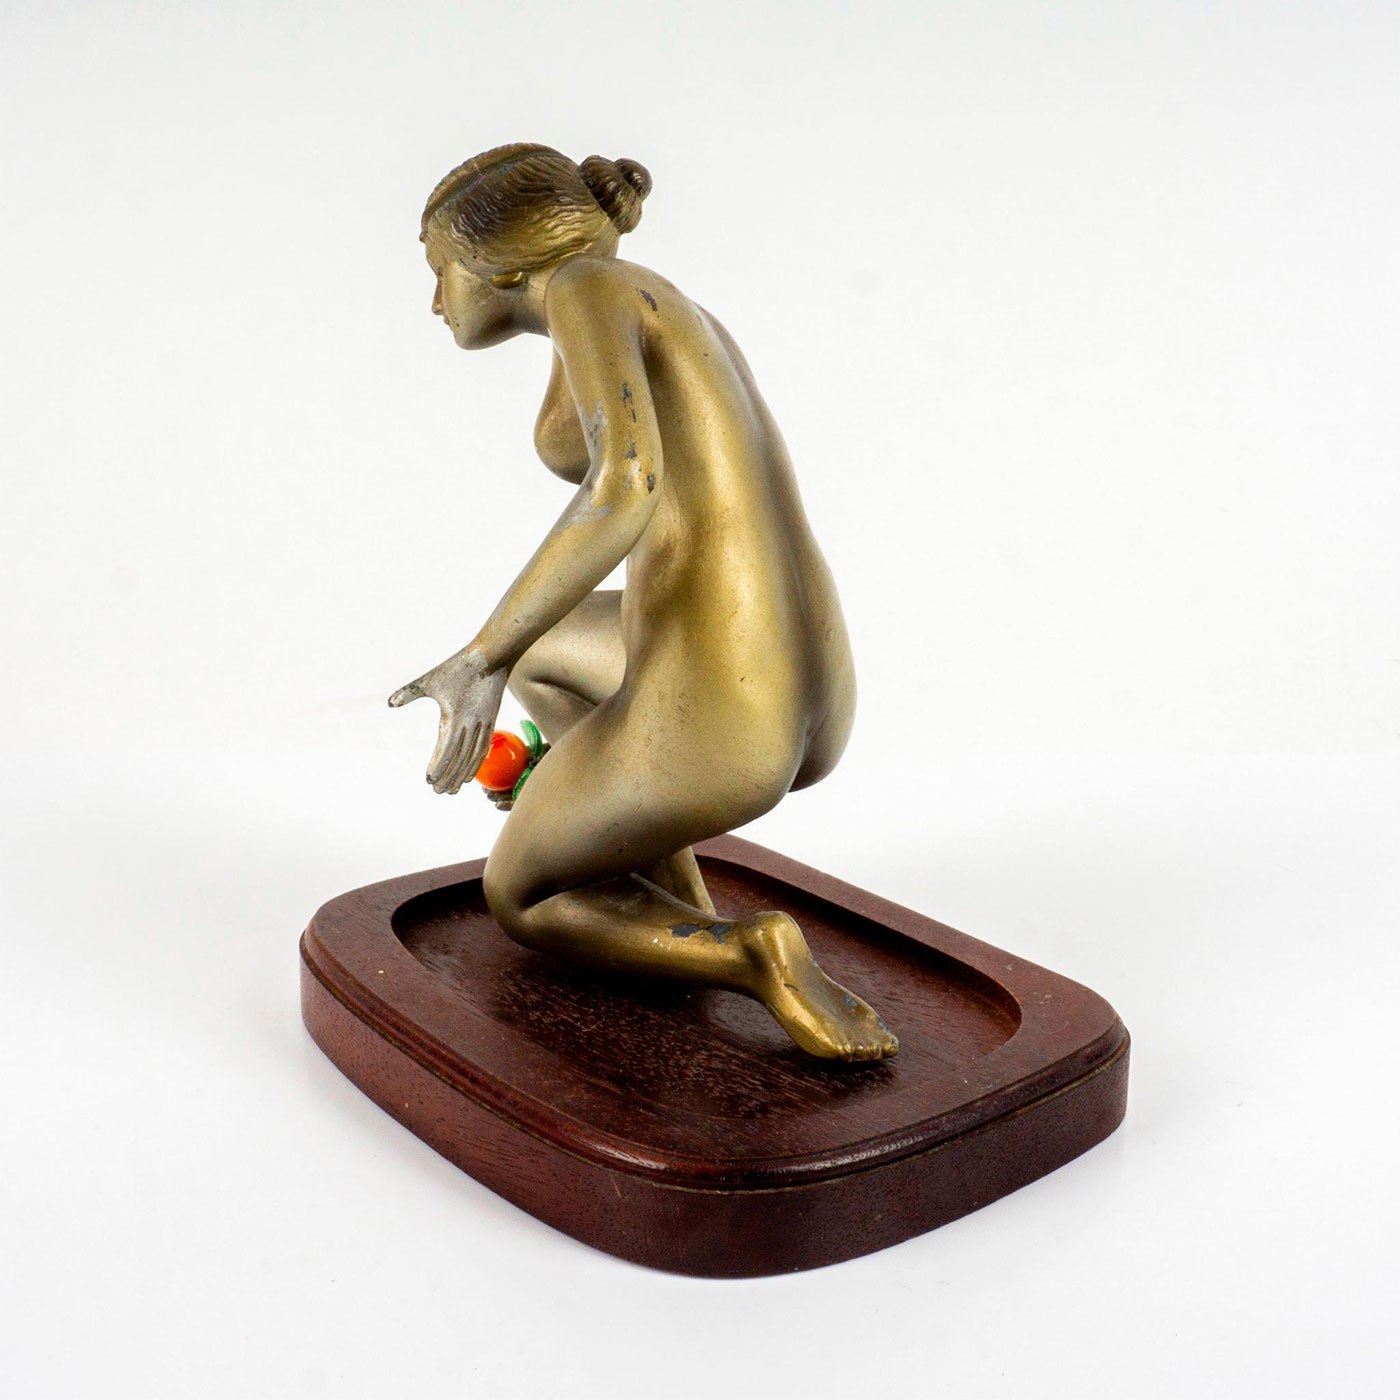 Vintage Art Deco Brass Sculpture, Nude Female With Orange - Image 3 of 4